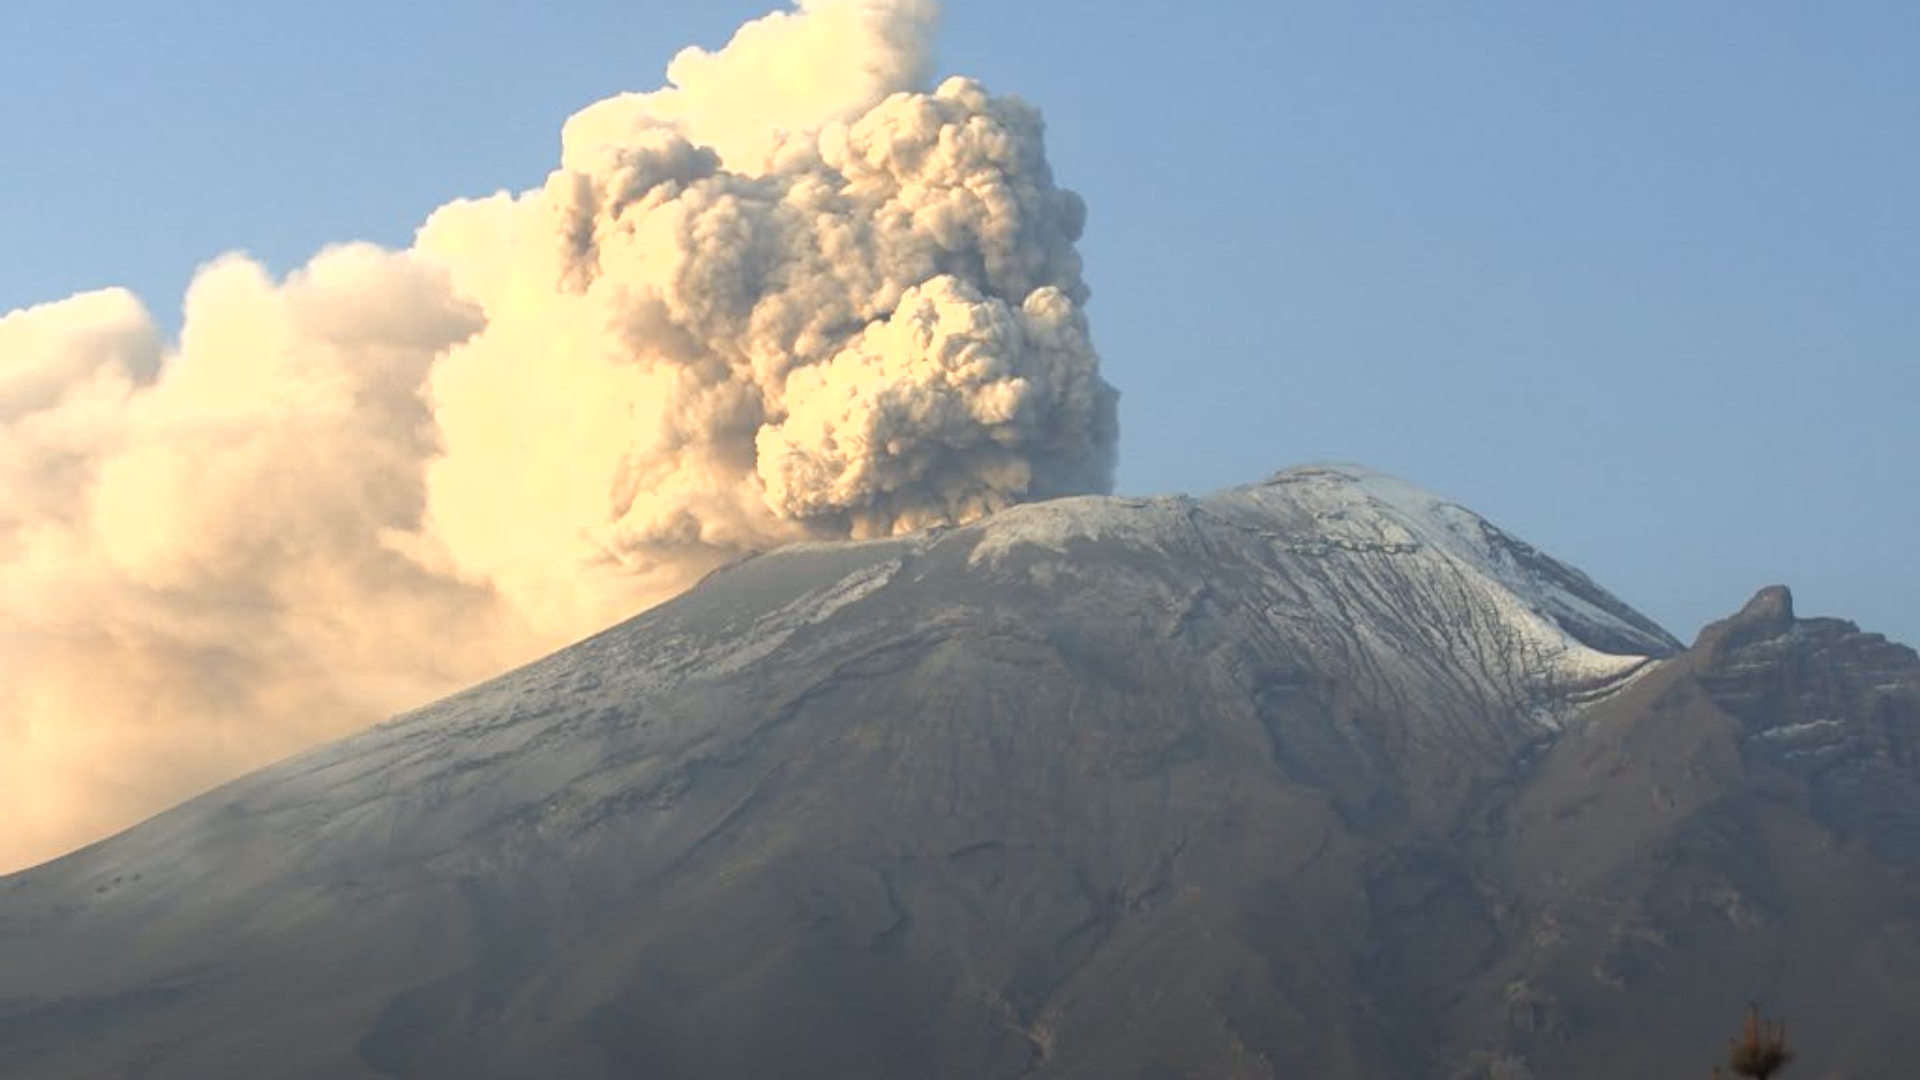 Volcán Popocatépetl hoy 25 de mayo: continúa expulsión de fragmentos incandescentes a corta distancia 